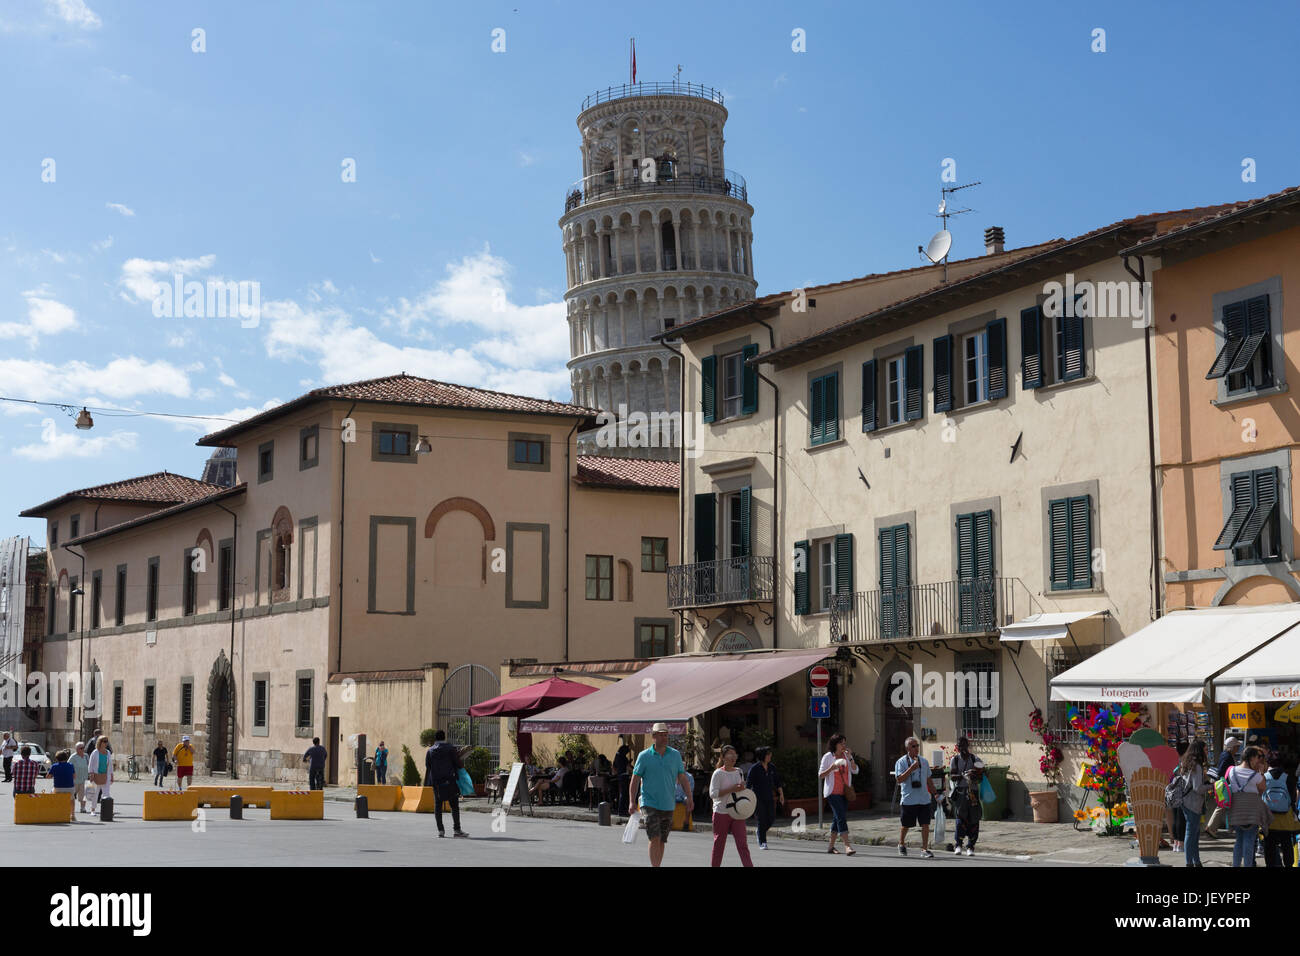 Piazza Arcivescovado, Pisa Italy Stock Photo - Alamy